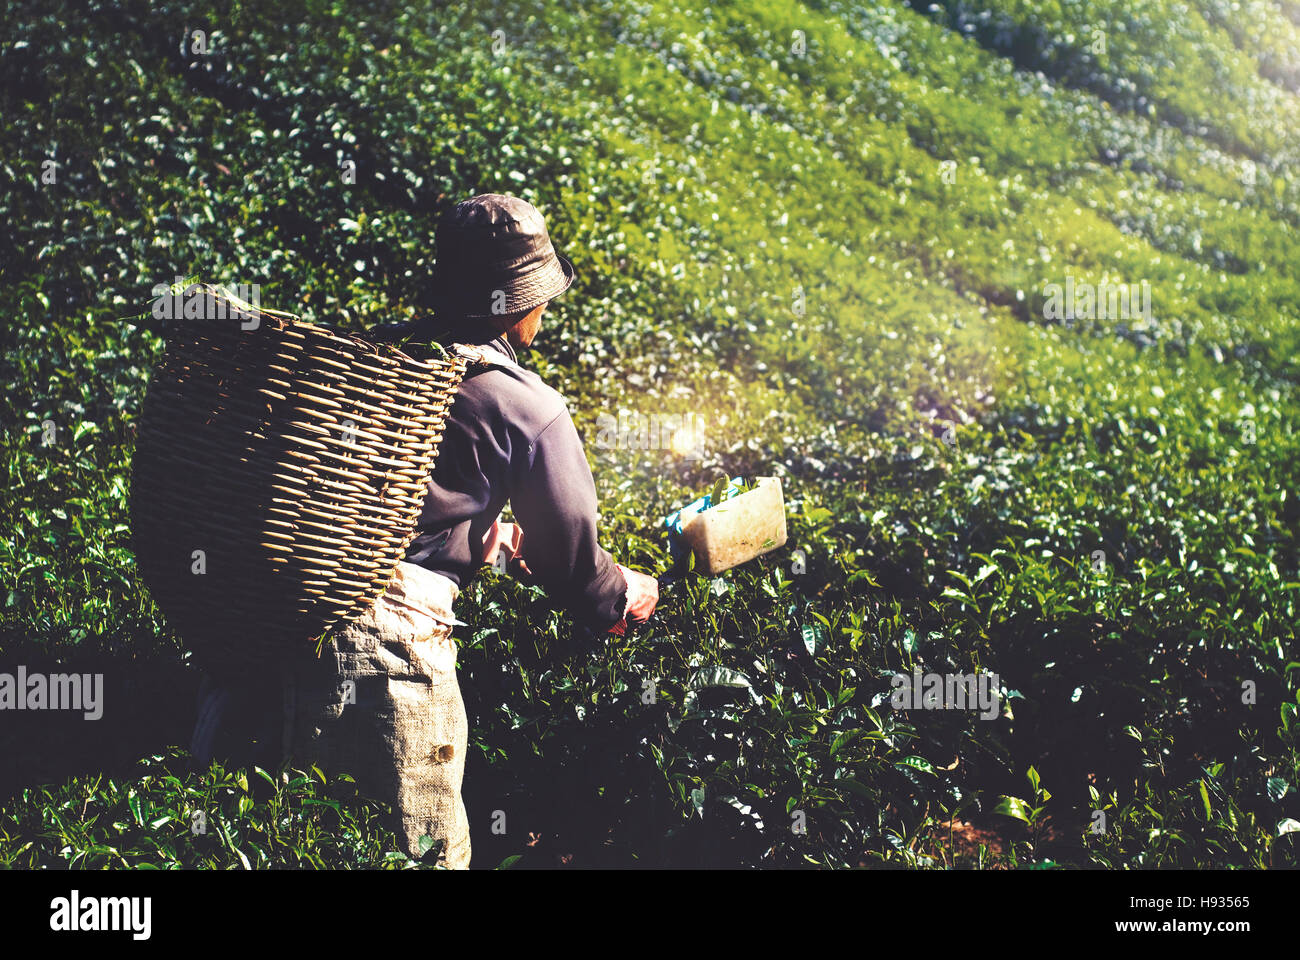 Agriculture Agriculturist Harvest Tea Crop Concept Stock Photo